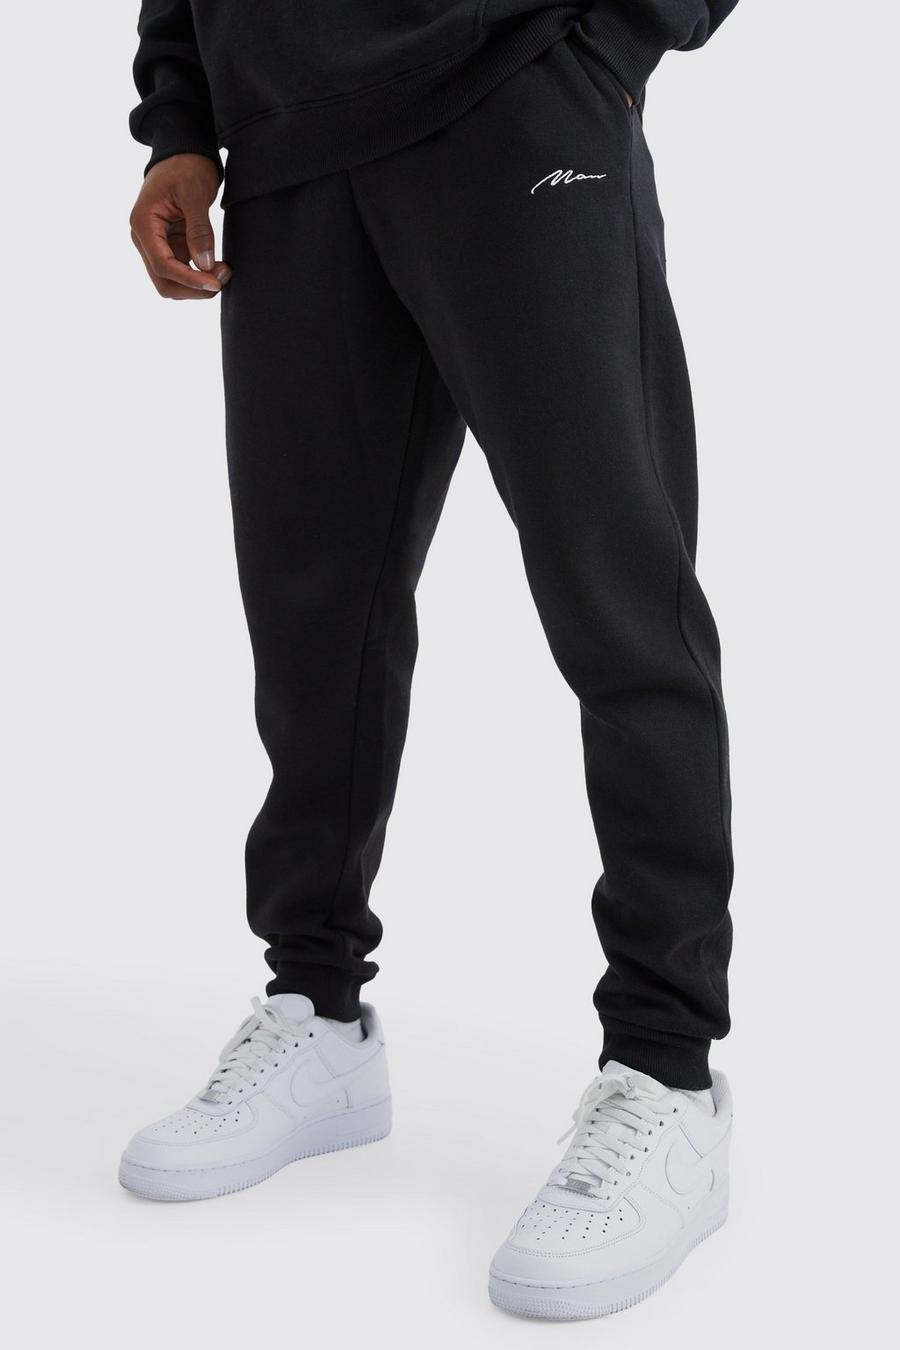 Pantalón deportivo ajustado con firma MAN, Black negro